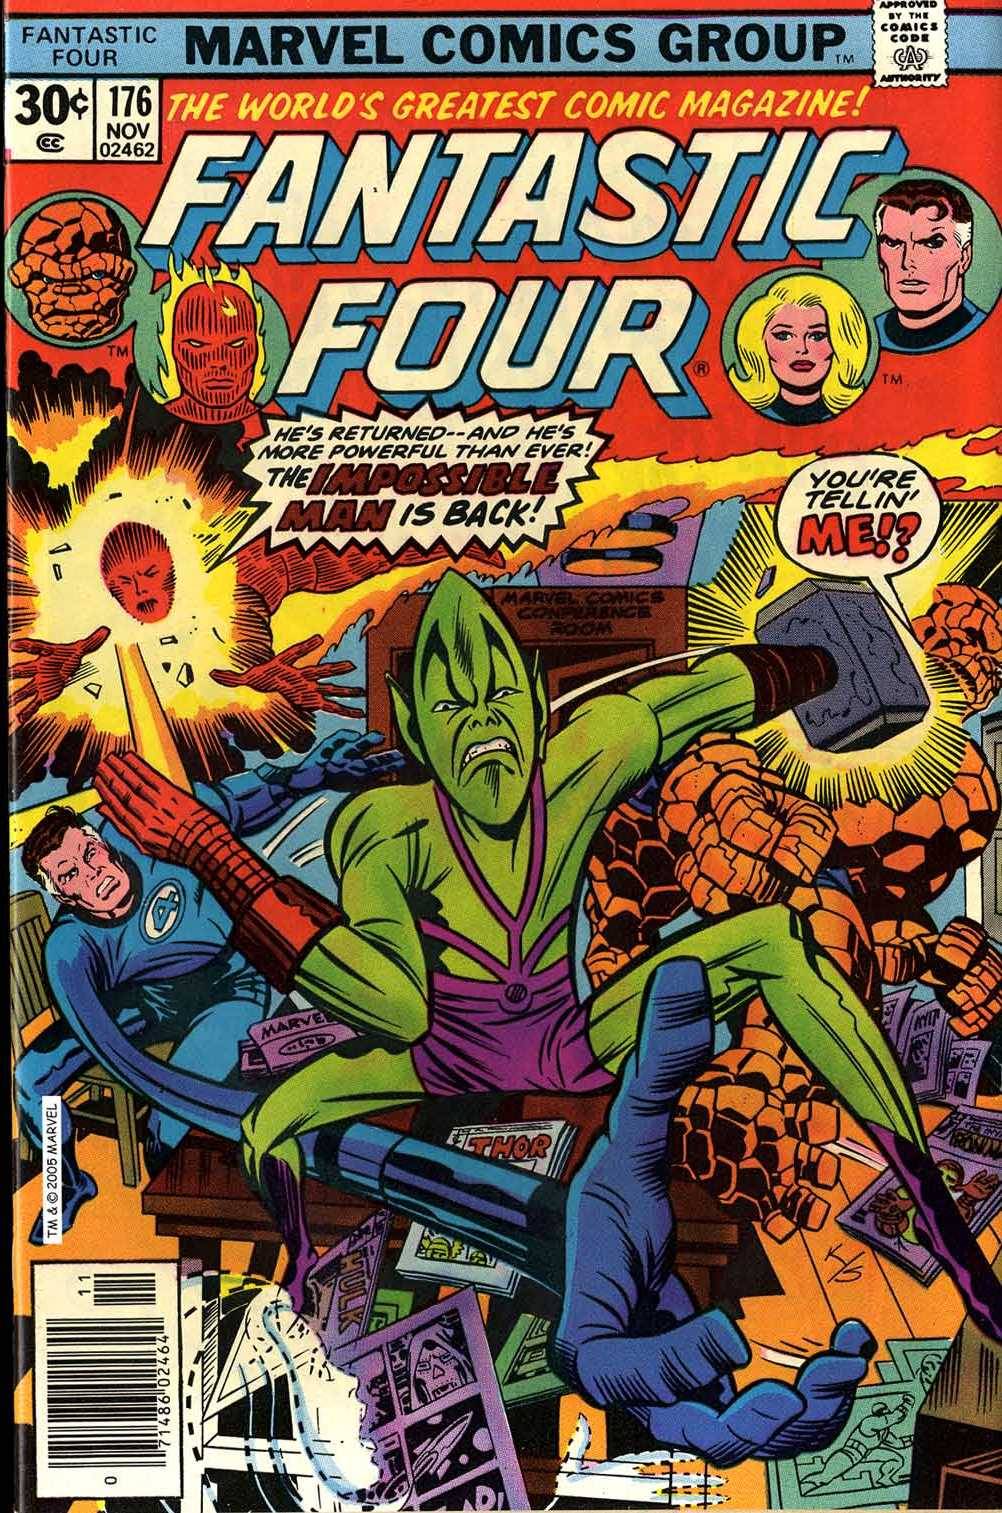 Tom Brevoort Reveals the Fantastix, New Rivals for the Fantastic Four